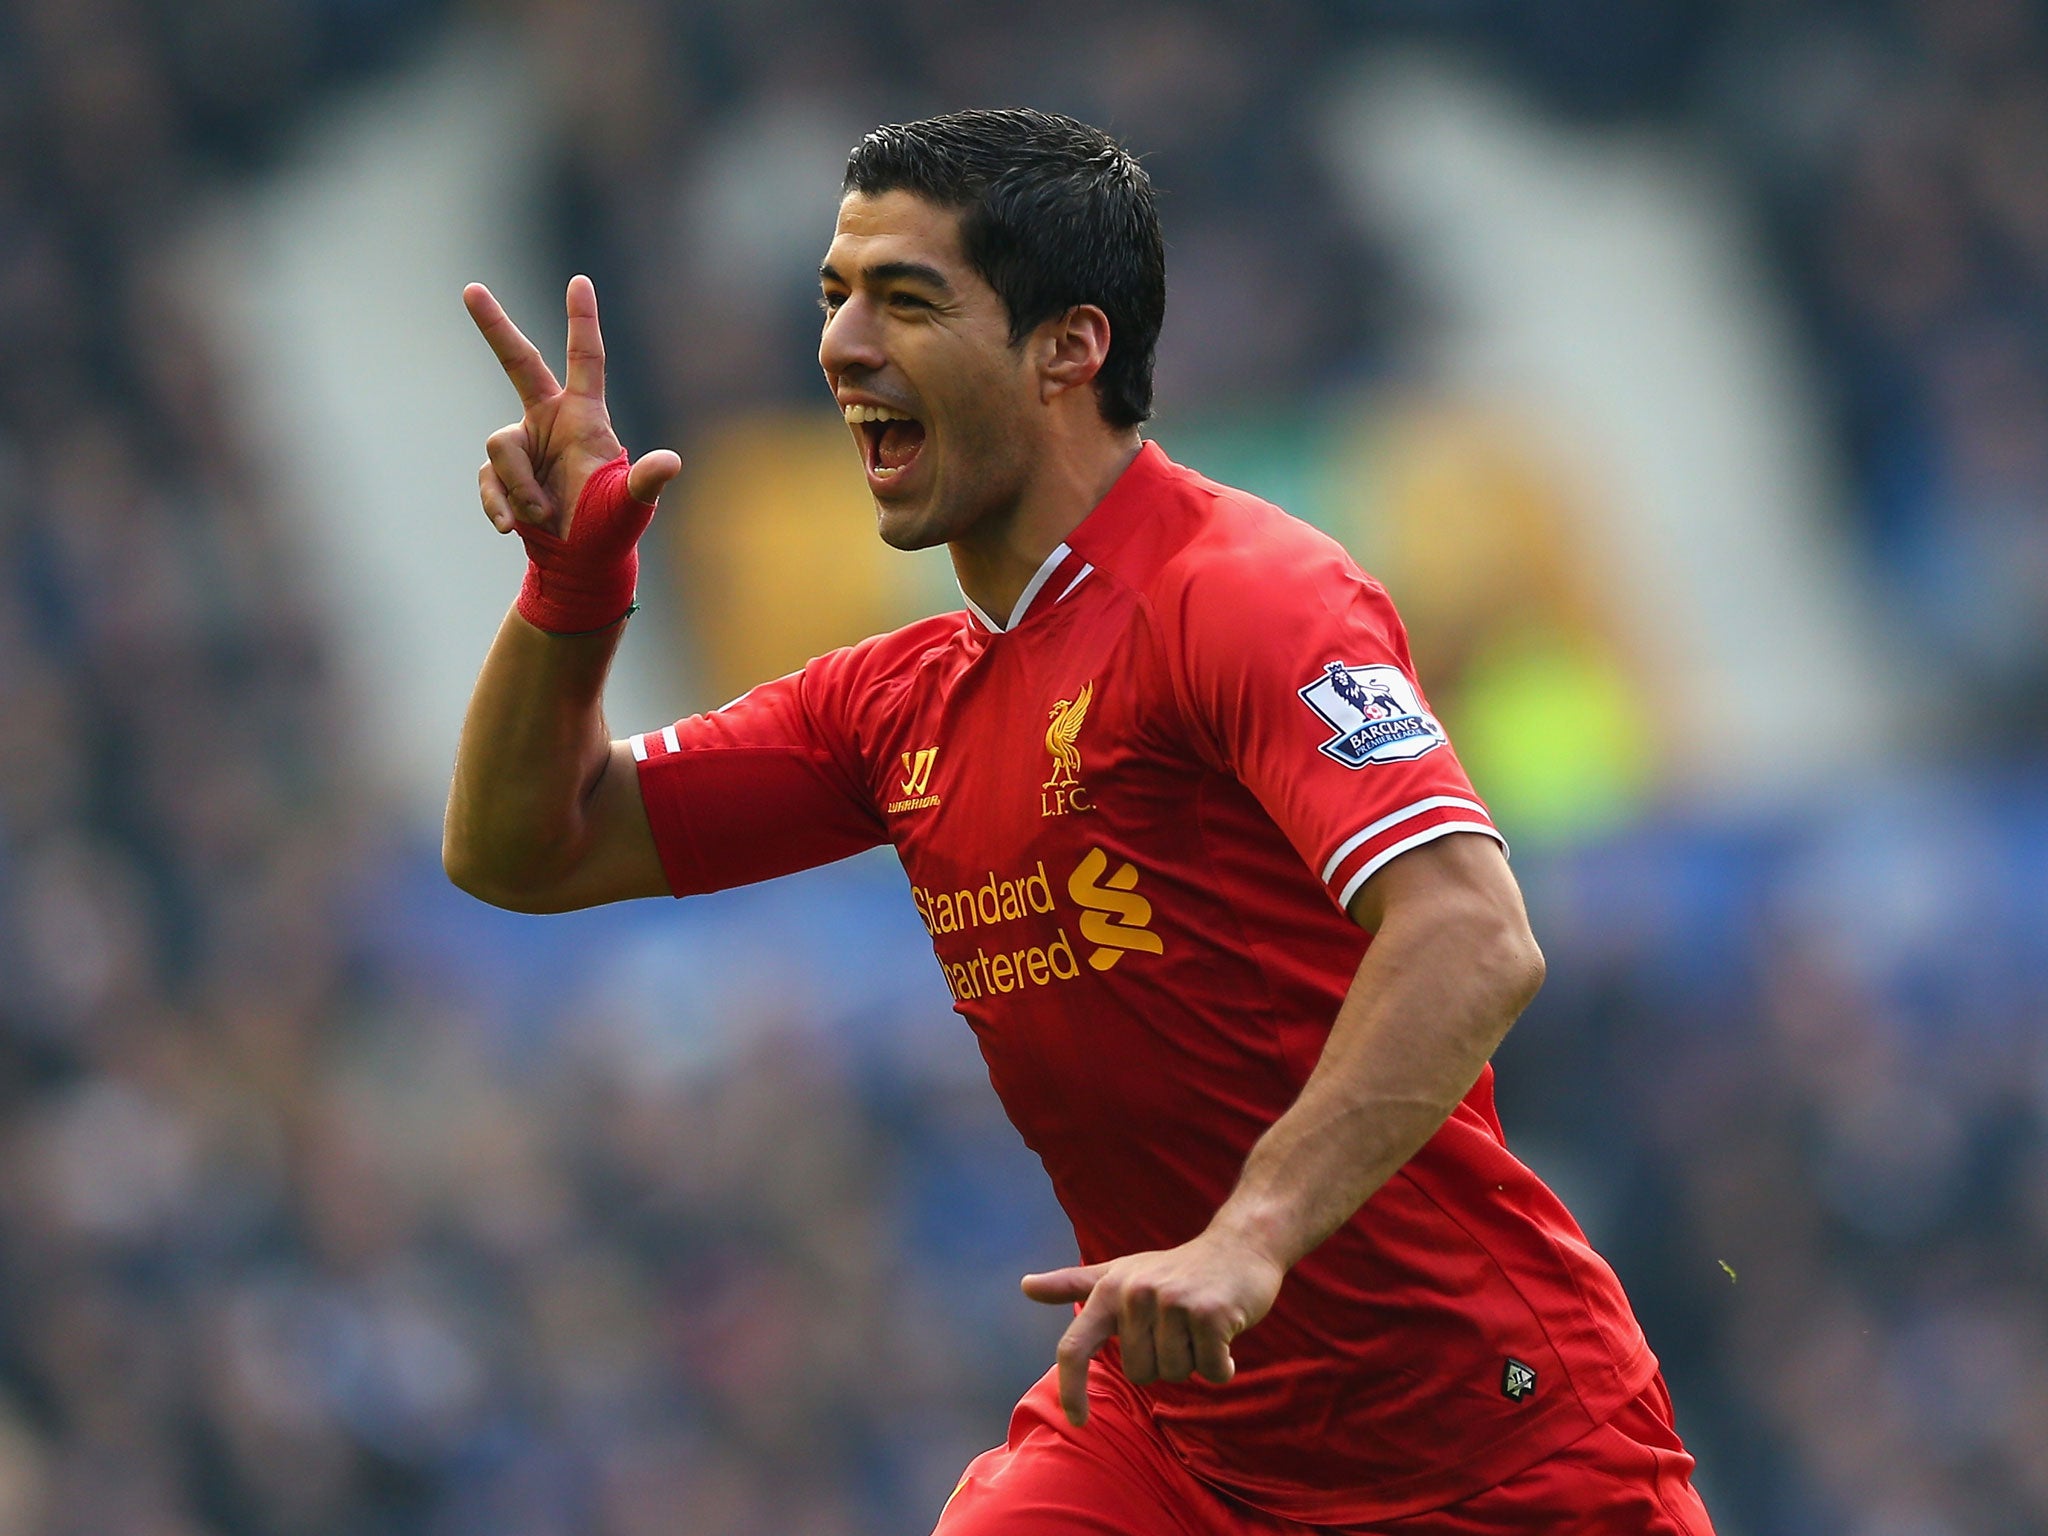 Luis Suarez of Liverpool celebrates scoring his team's second goal